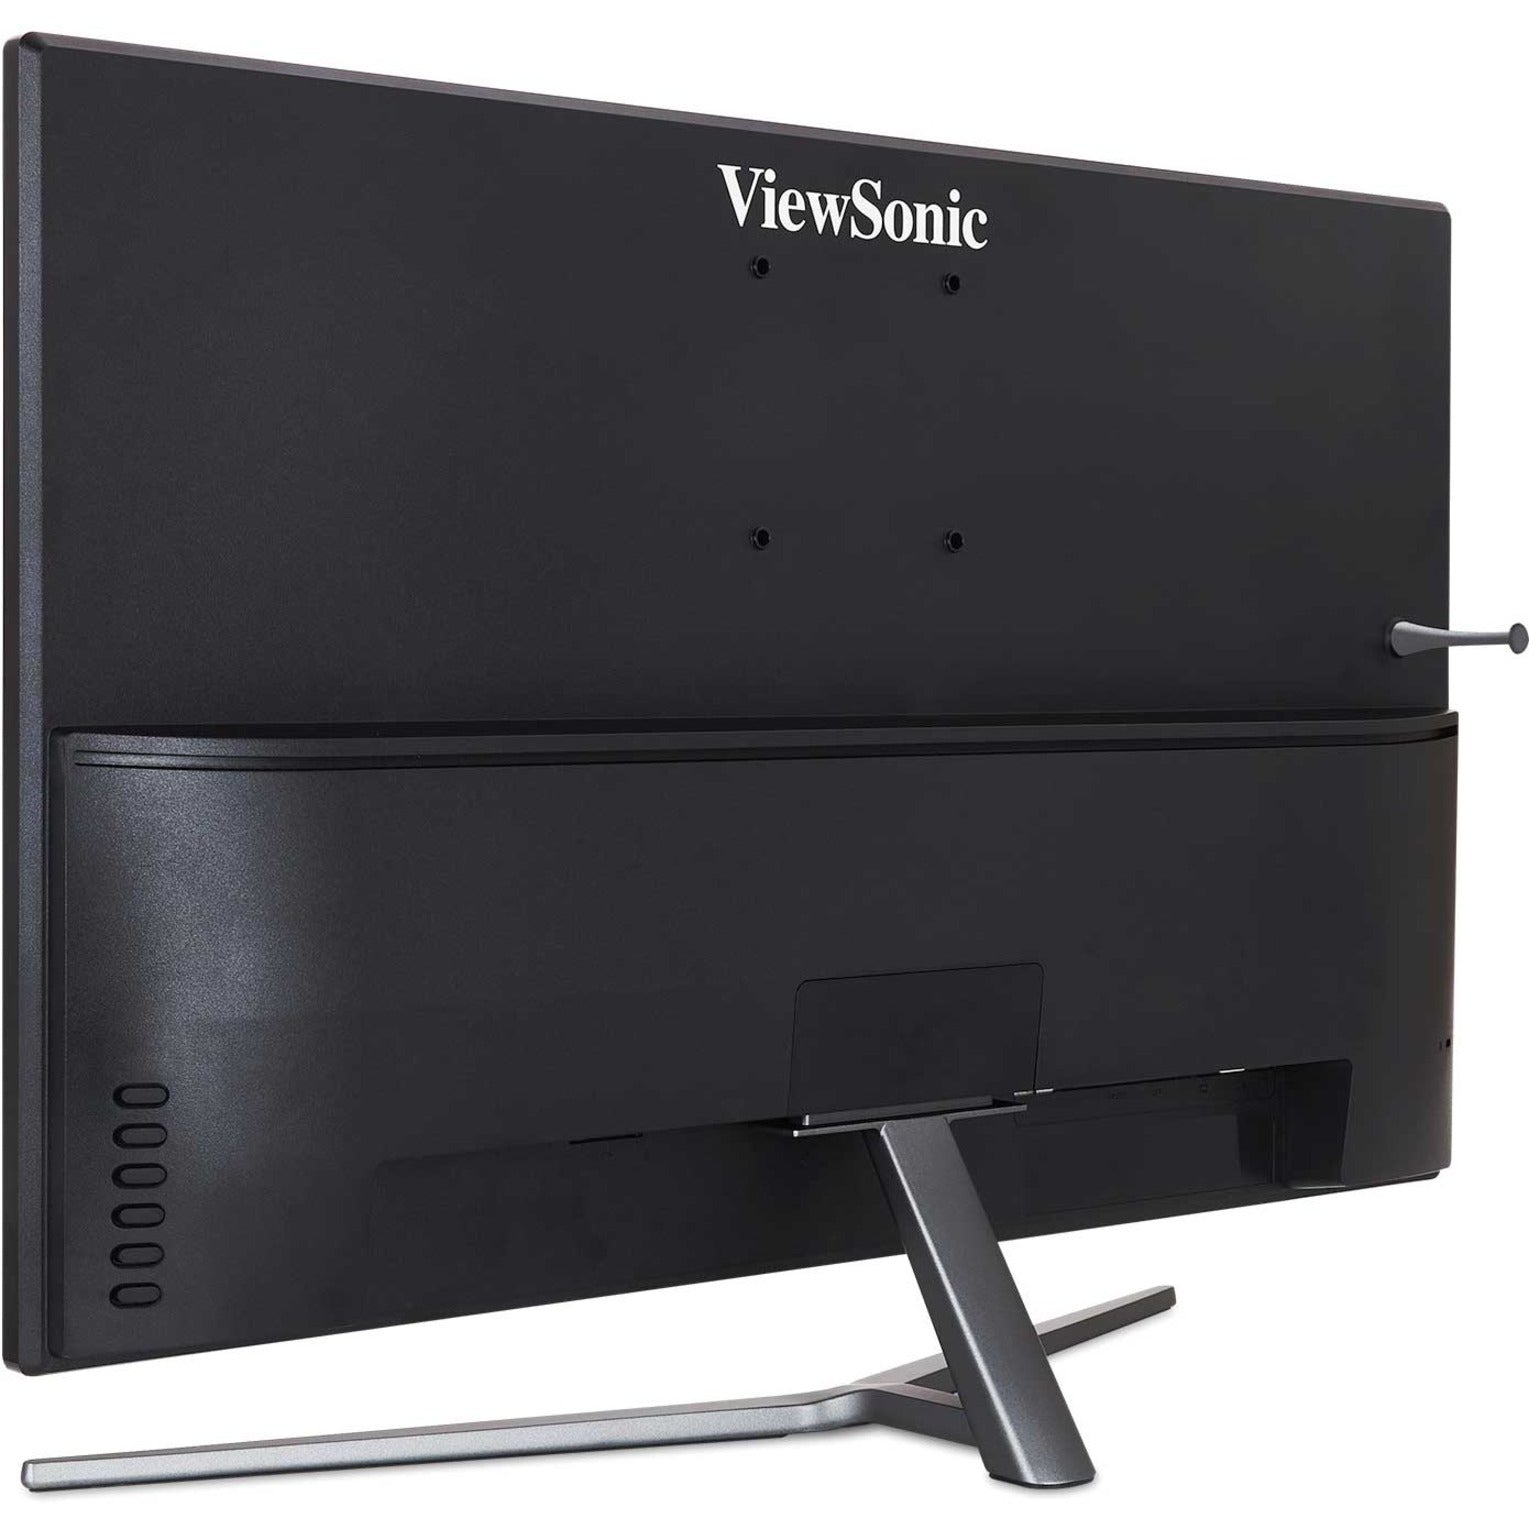 ViewSonic VX3211-2K-MHD 32" WQHD Monitor, HDMI, SuperClear IPS-Type Technology